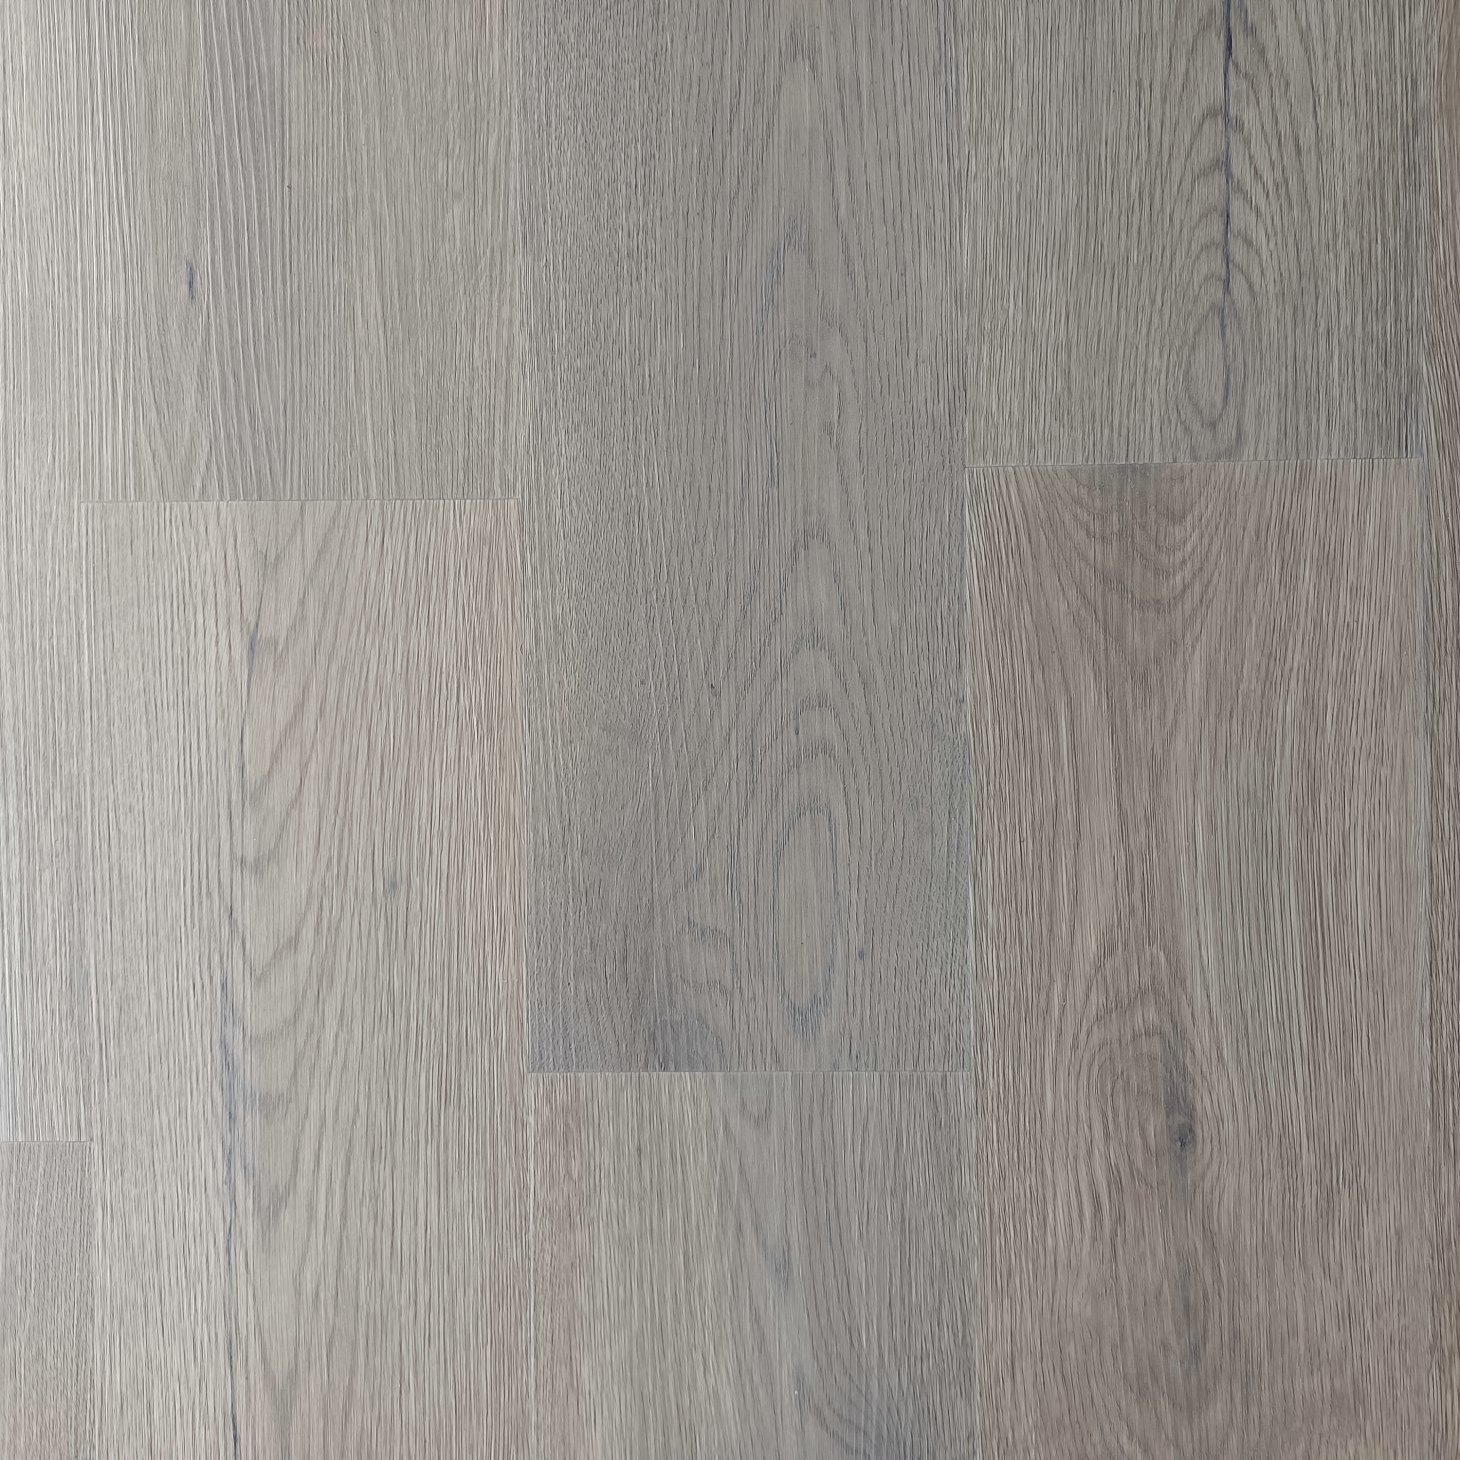 Good quality Oiled Wood Floor -
 Stable structure ABA luxury rigid spc flooring from Kangton – Kangton